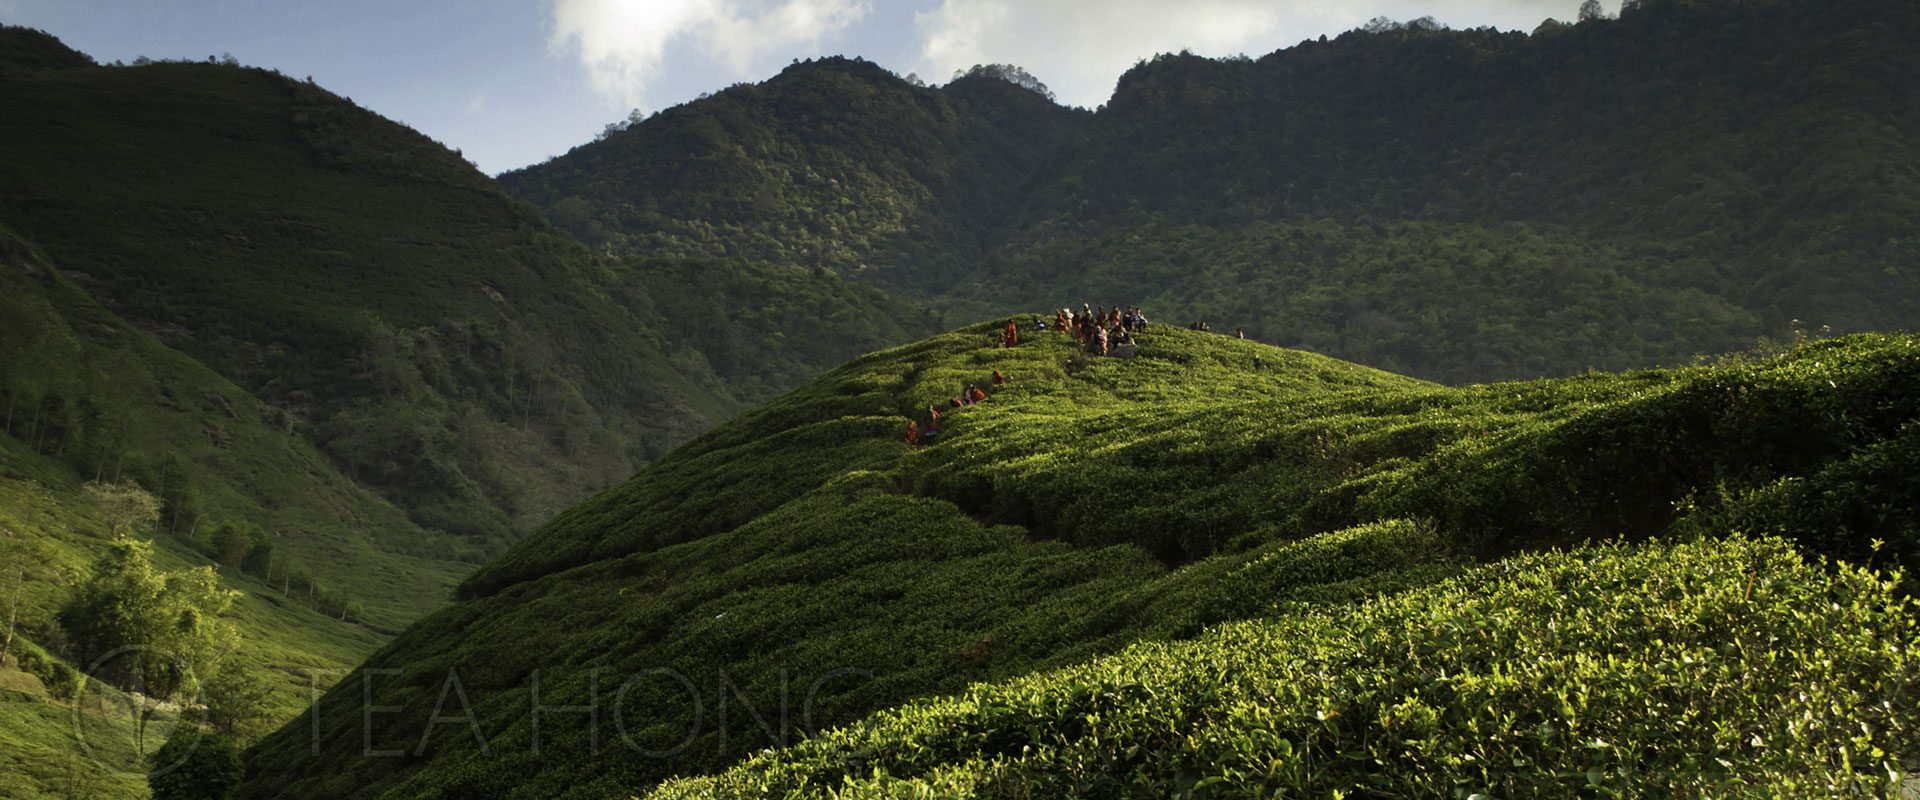 Tea Regions of TeaHomg.com: Nepal / Himalayas